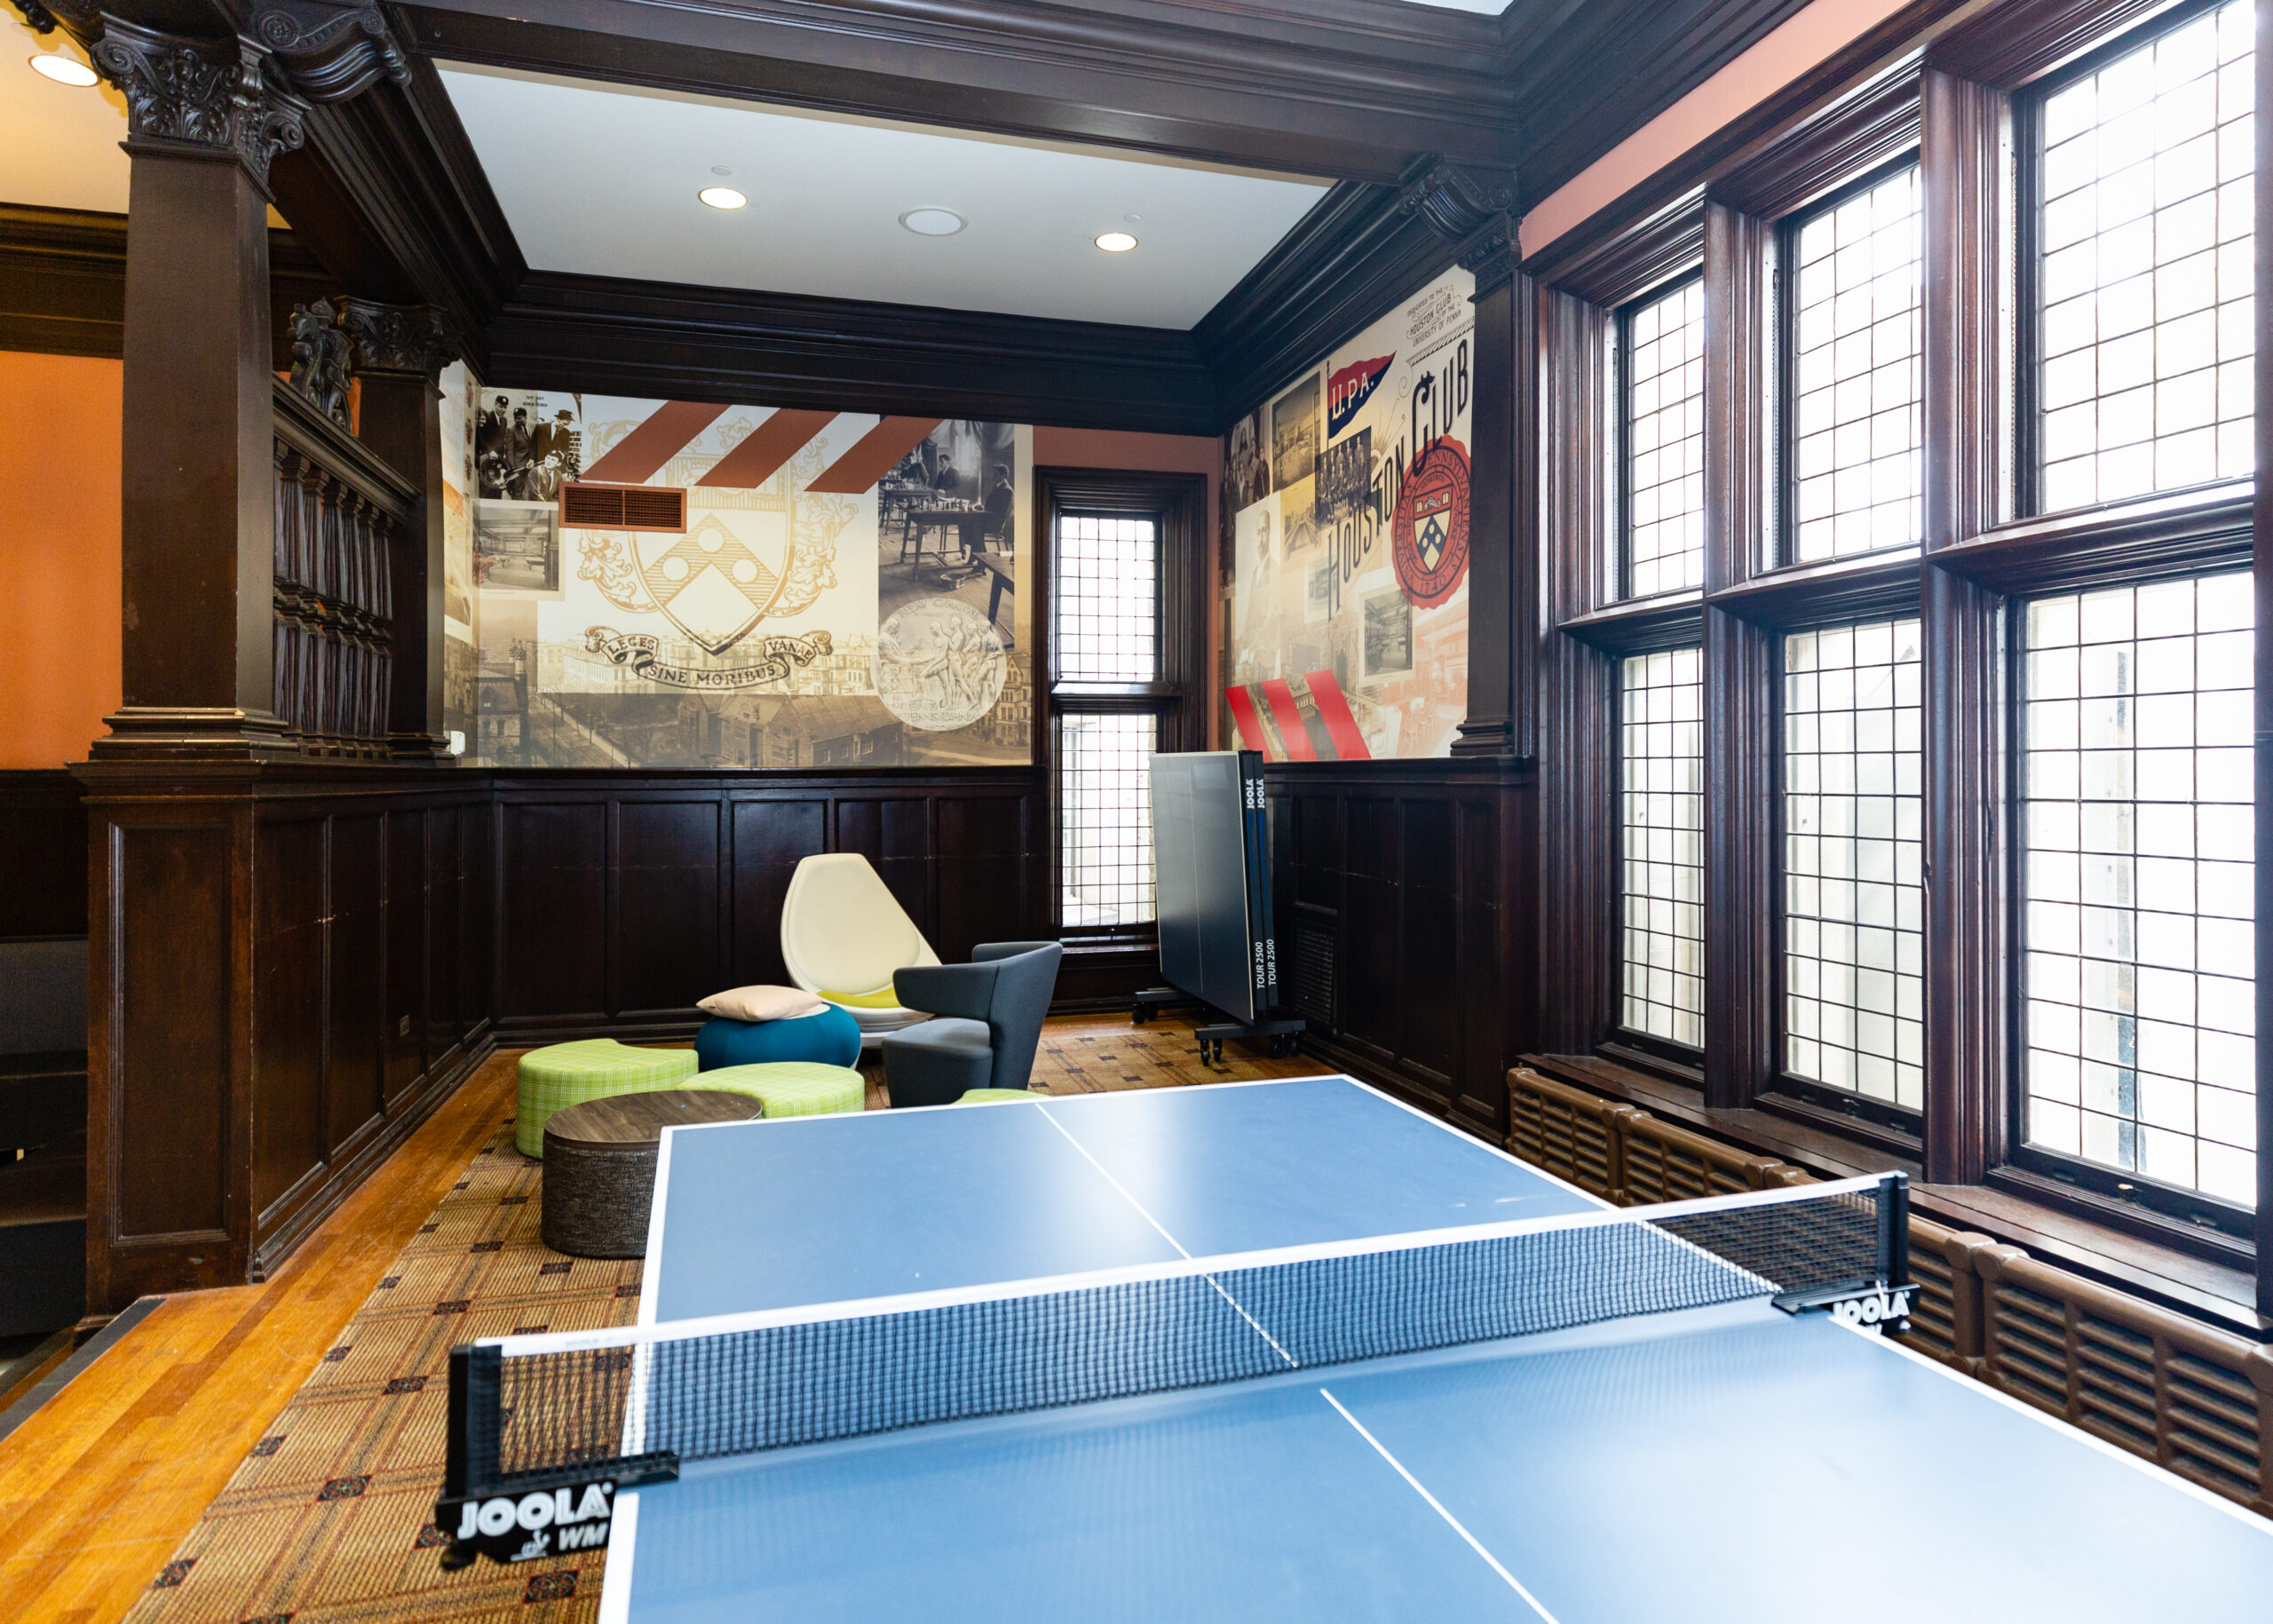 Table tennis inside Houston Hall's game room